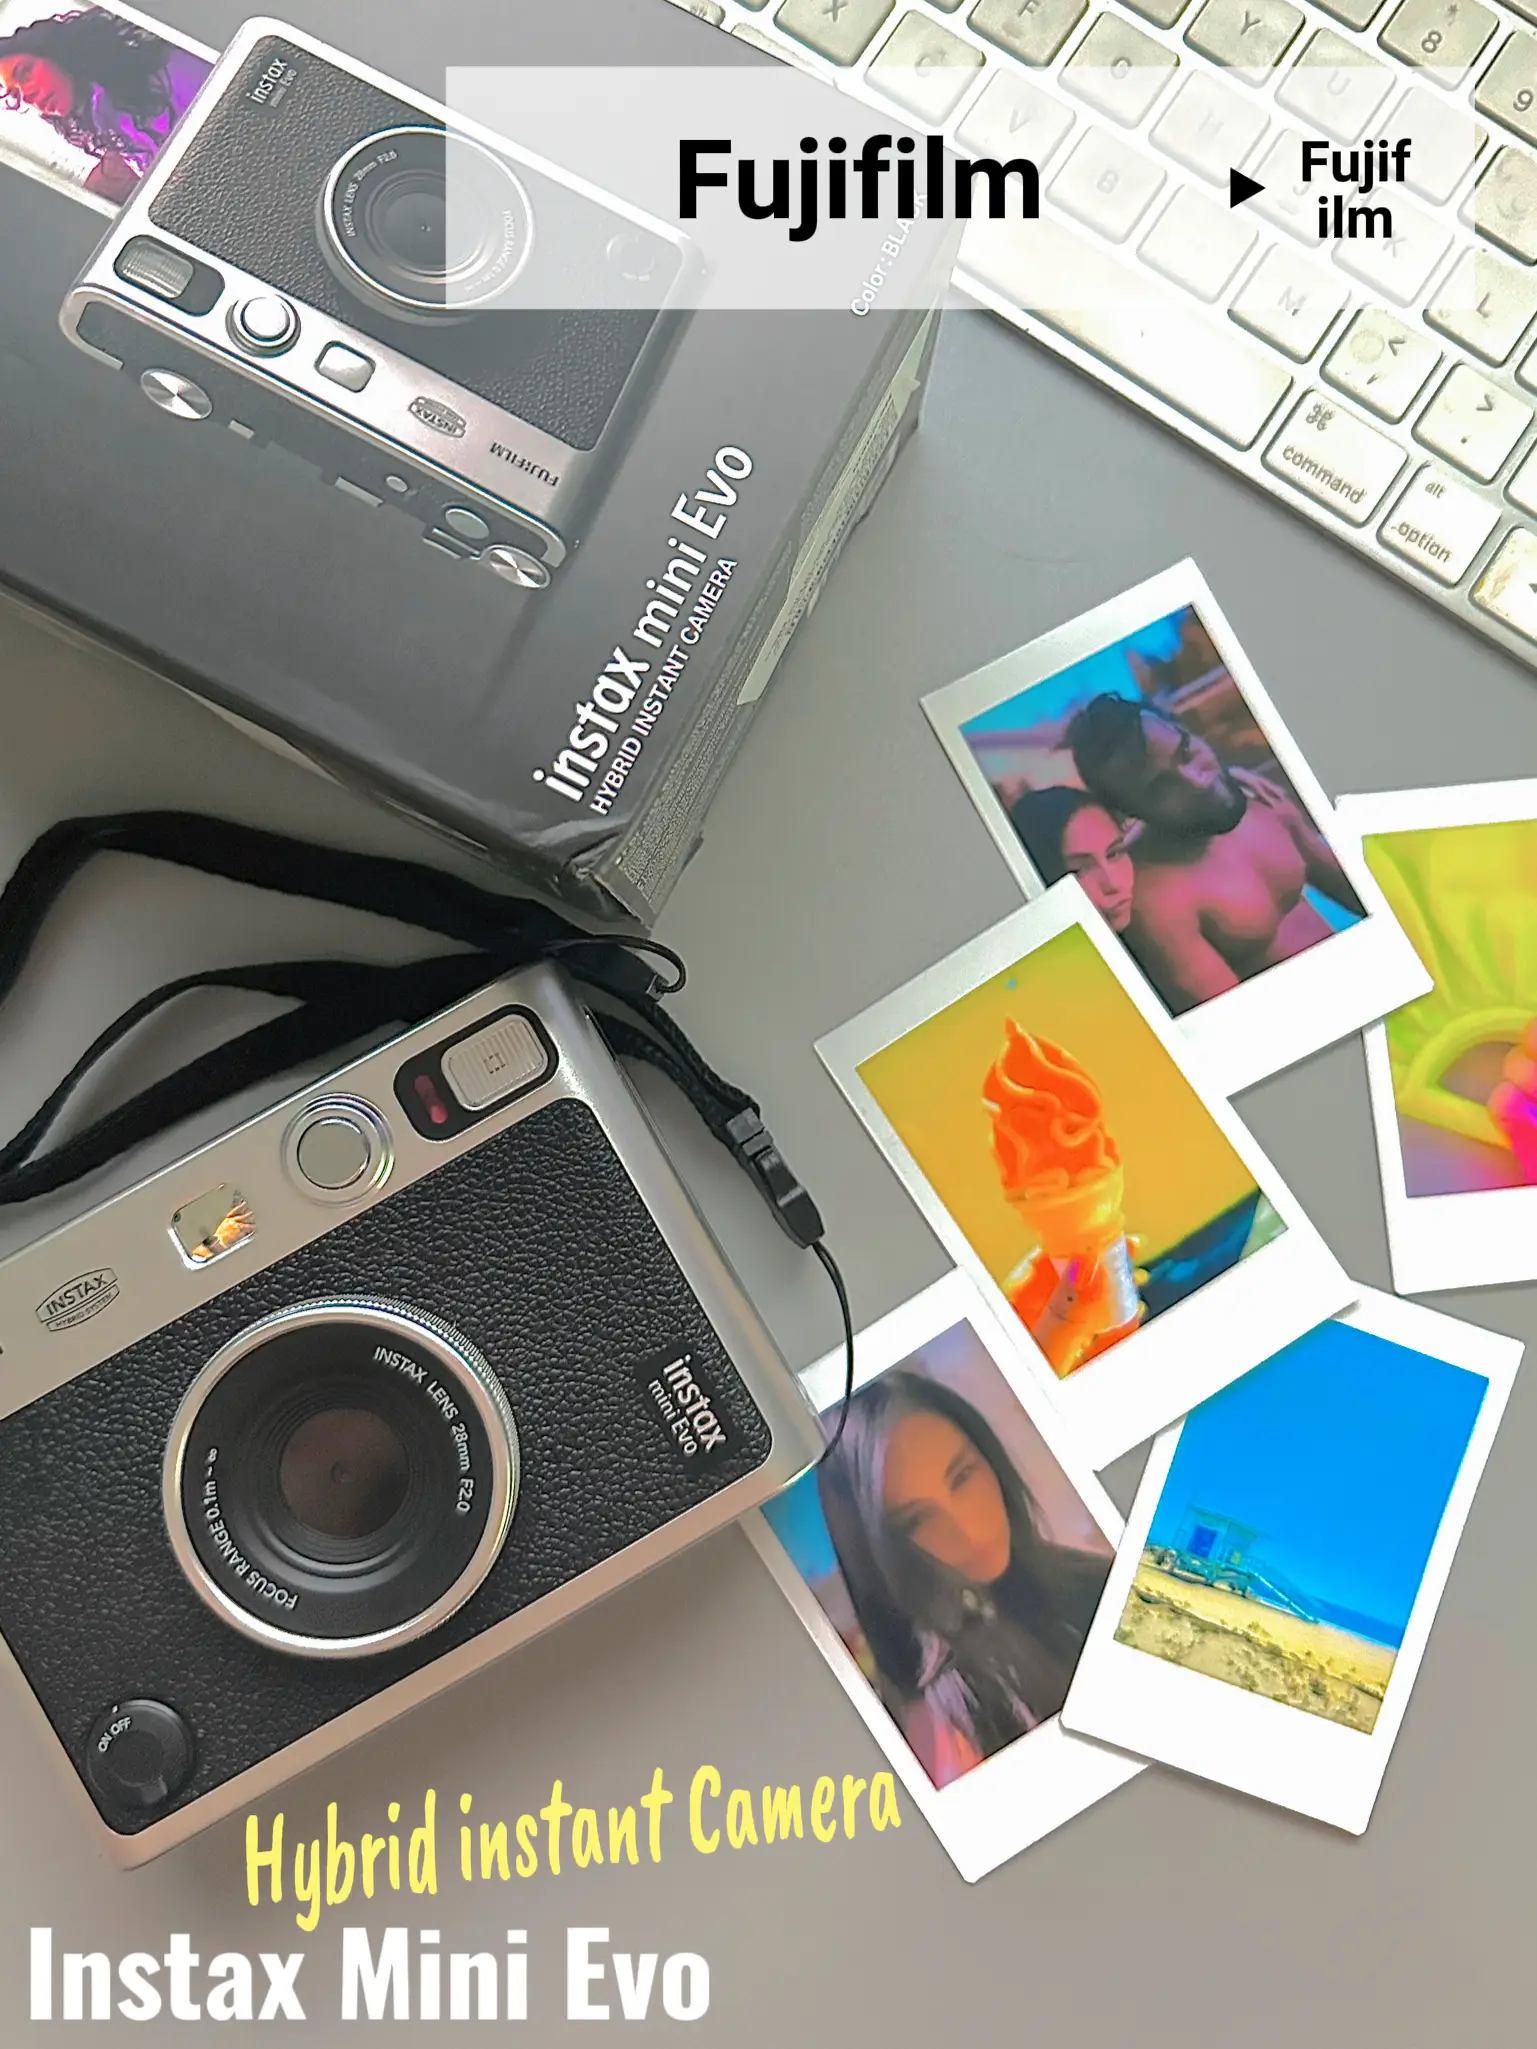 Cámara instantánea Polaroid Now+ i-Type. Curiosite